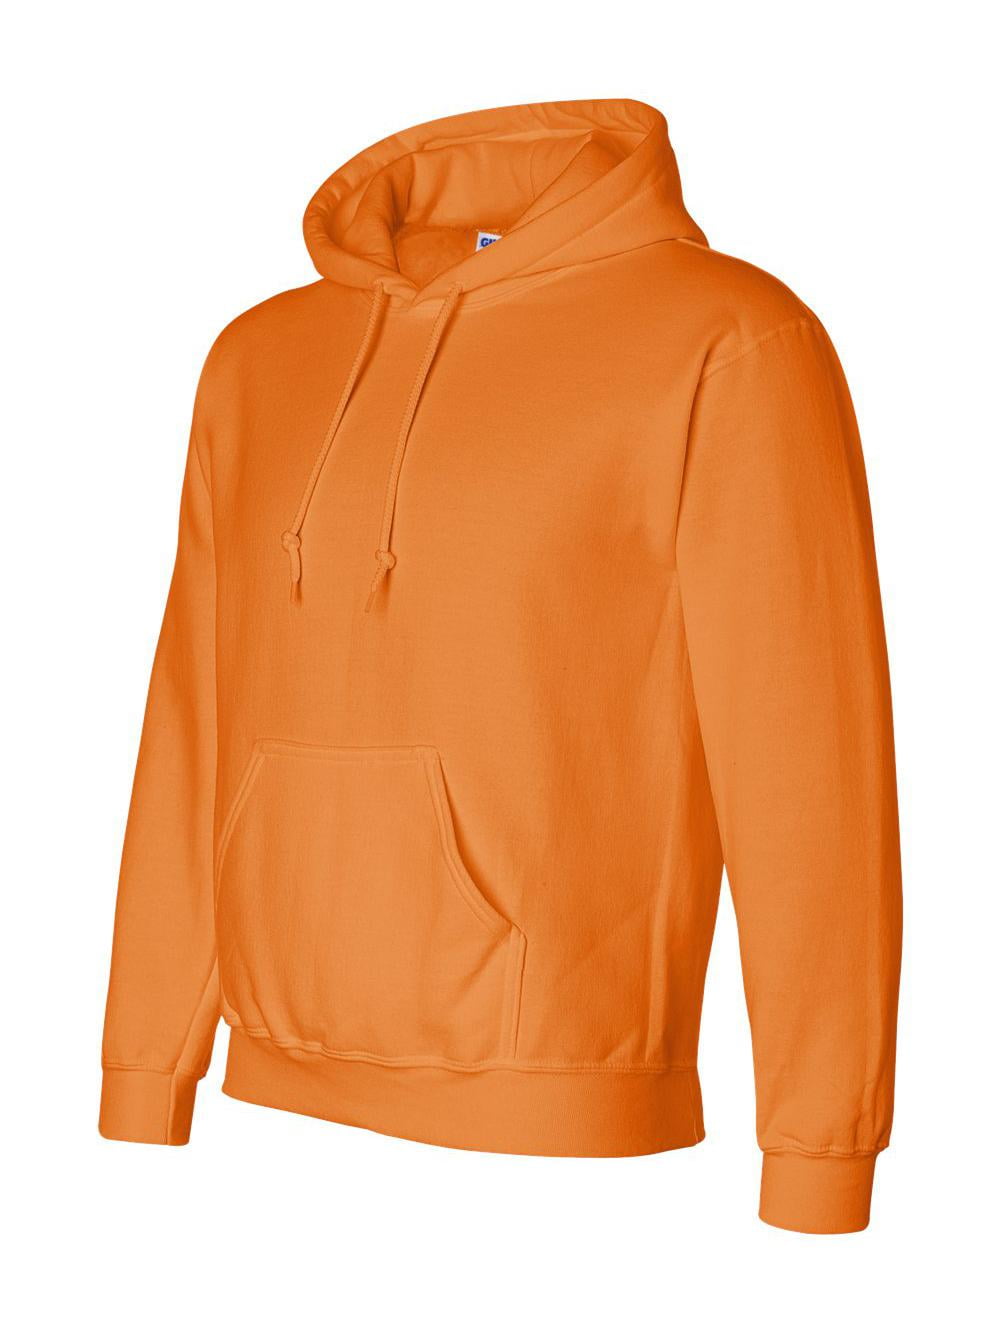 Gildan - DryBlend Hooded Sweatshirt - 12500 - Walmart.com